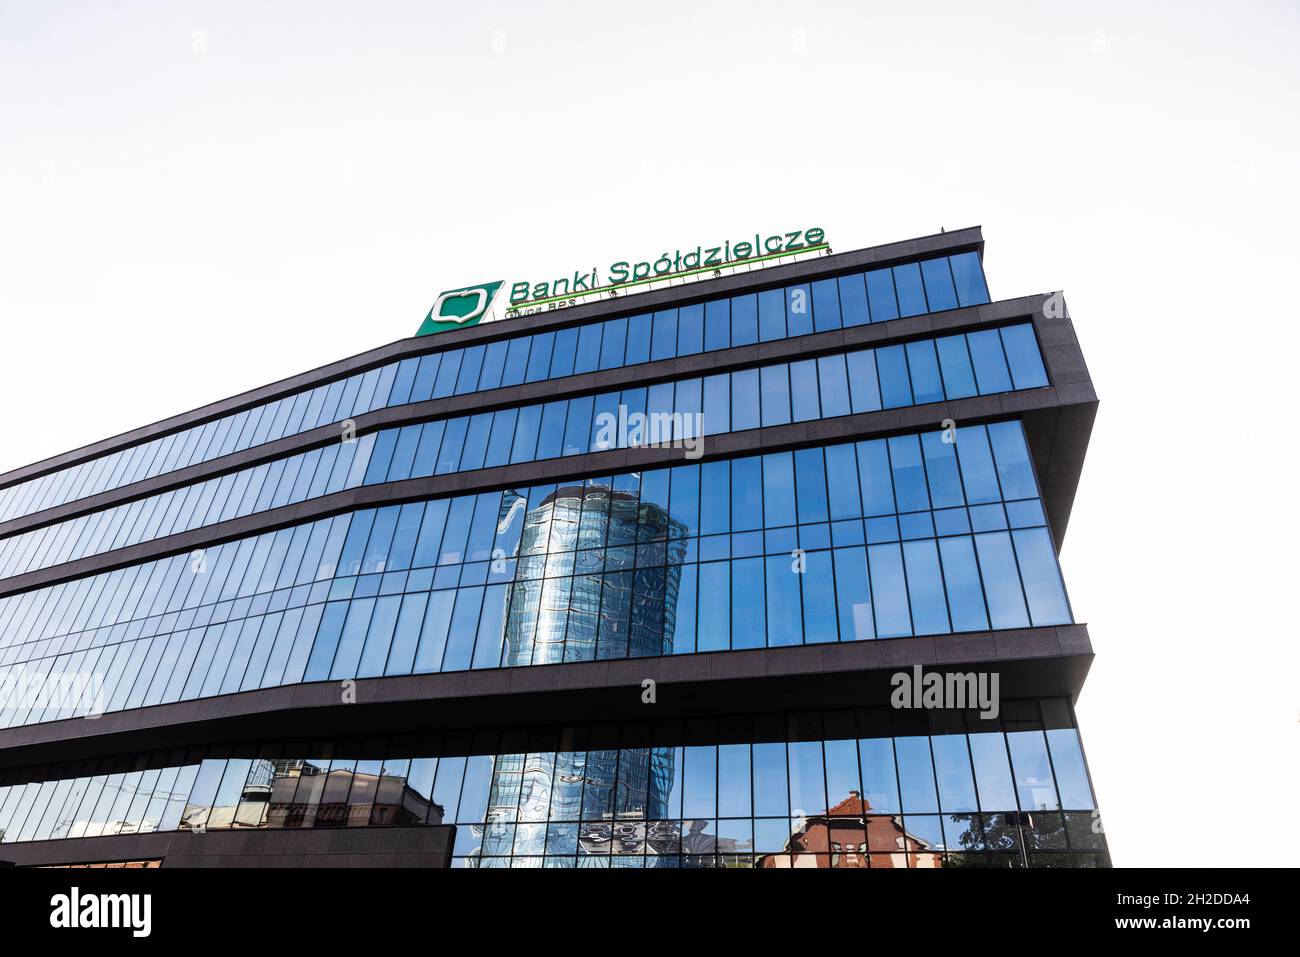 Warsaw, Poland - September 2, 2018: Facade of the Warszawski Spoldzielcze Bank or BPS in Warsaw, Poland Stock Photo